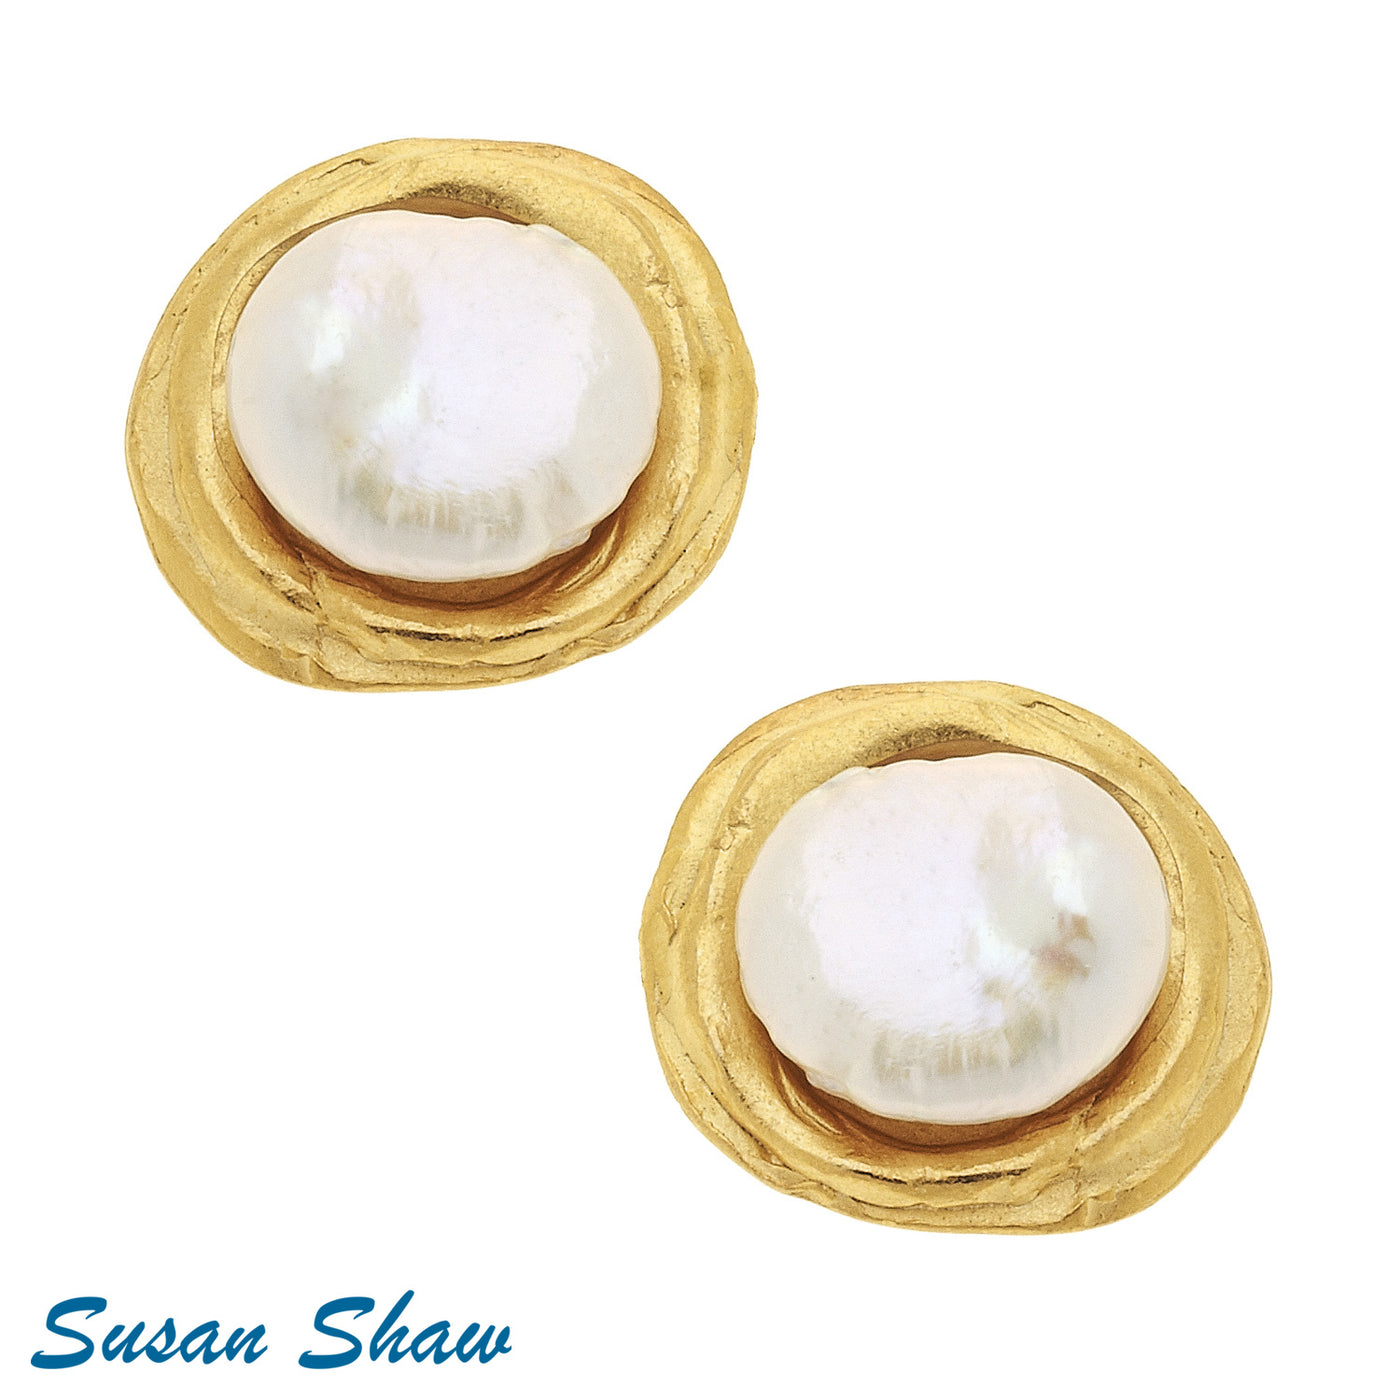 Susan Shaw Coin Pearl Earrings